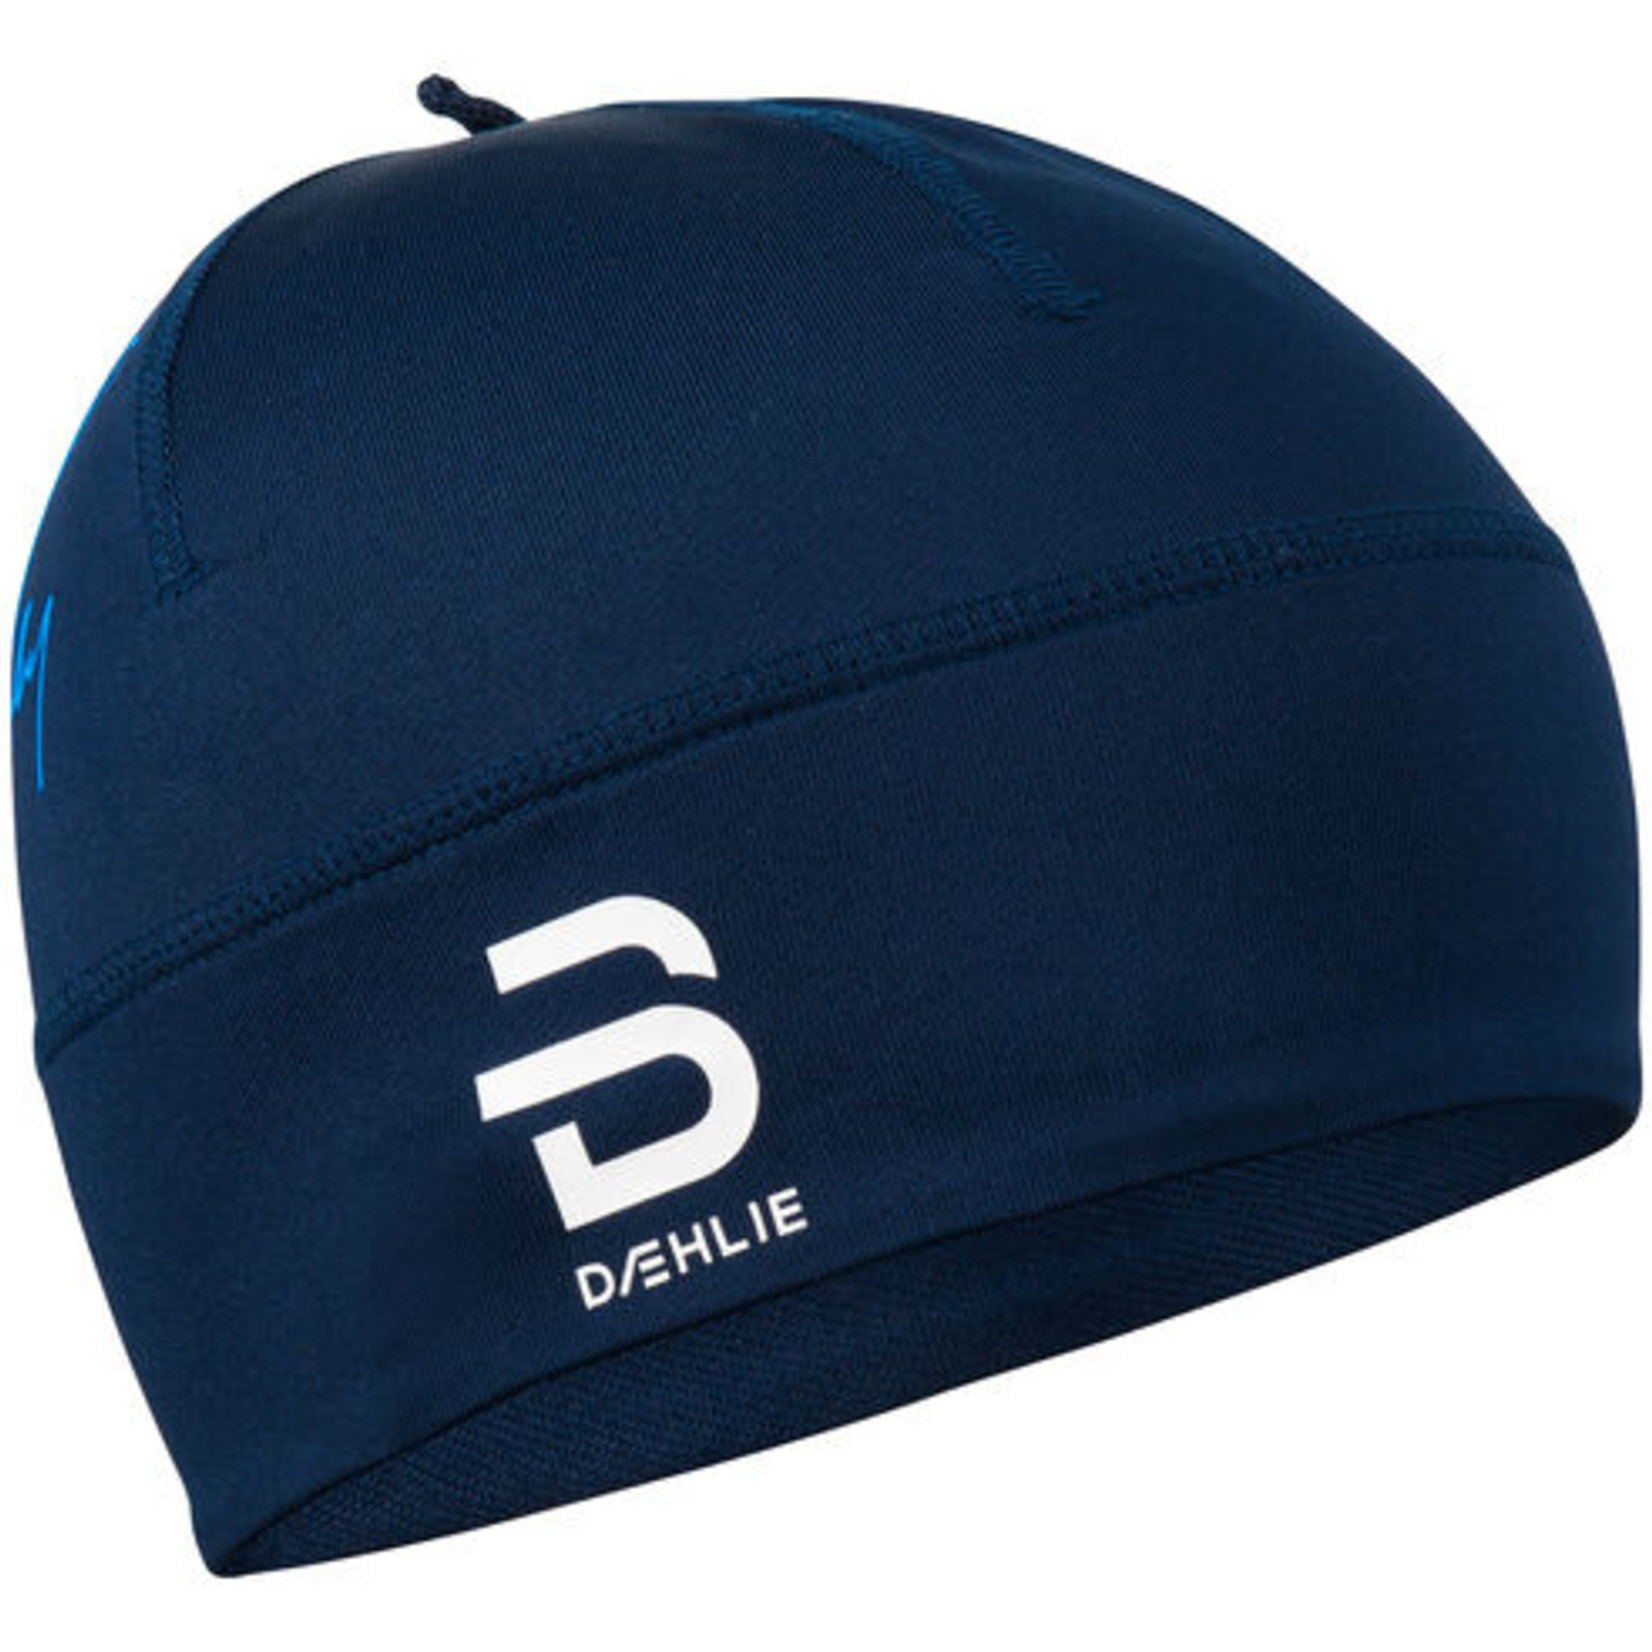 Daehlie DAEHLIE, Polyknit Hat W OS